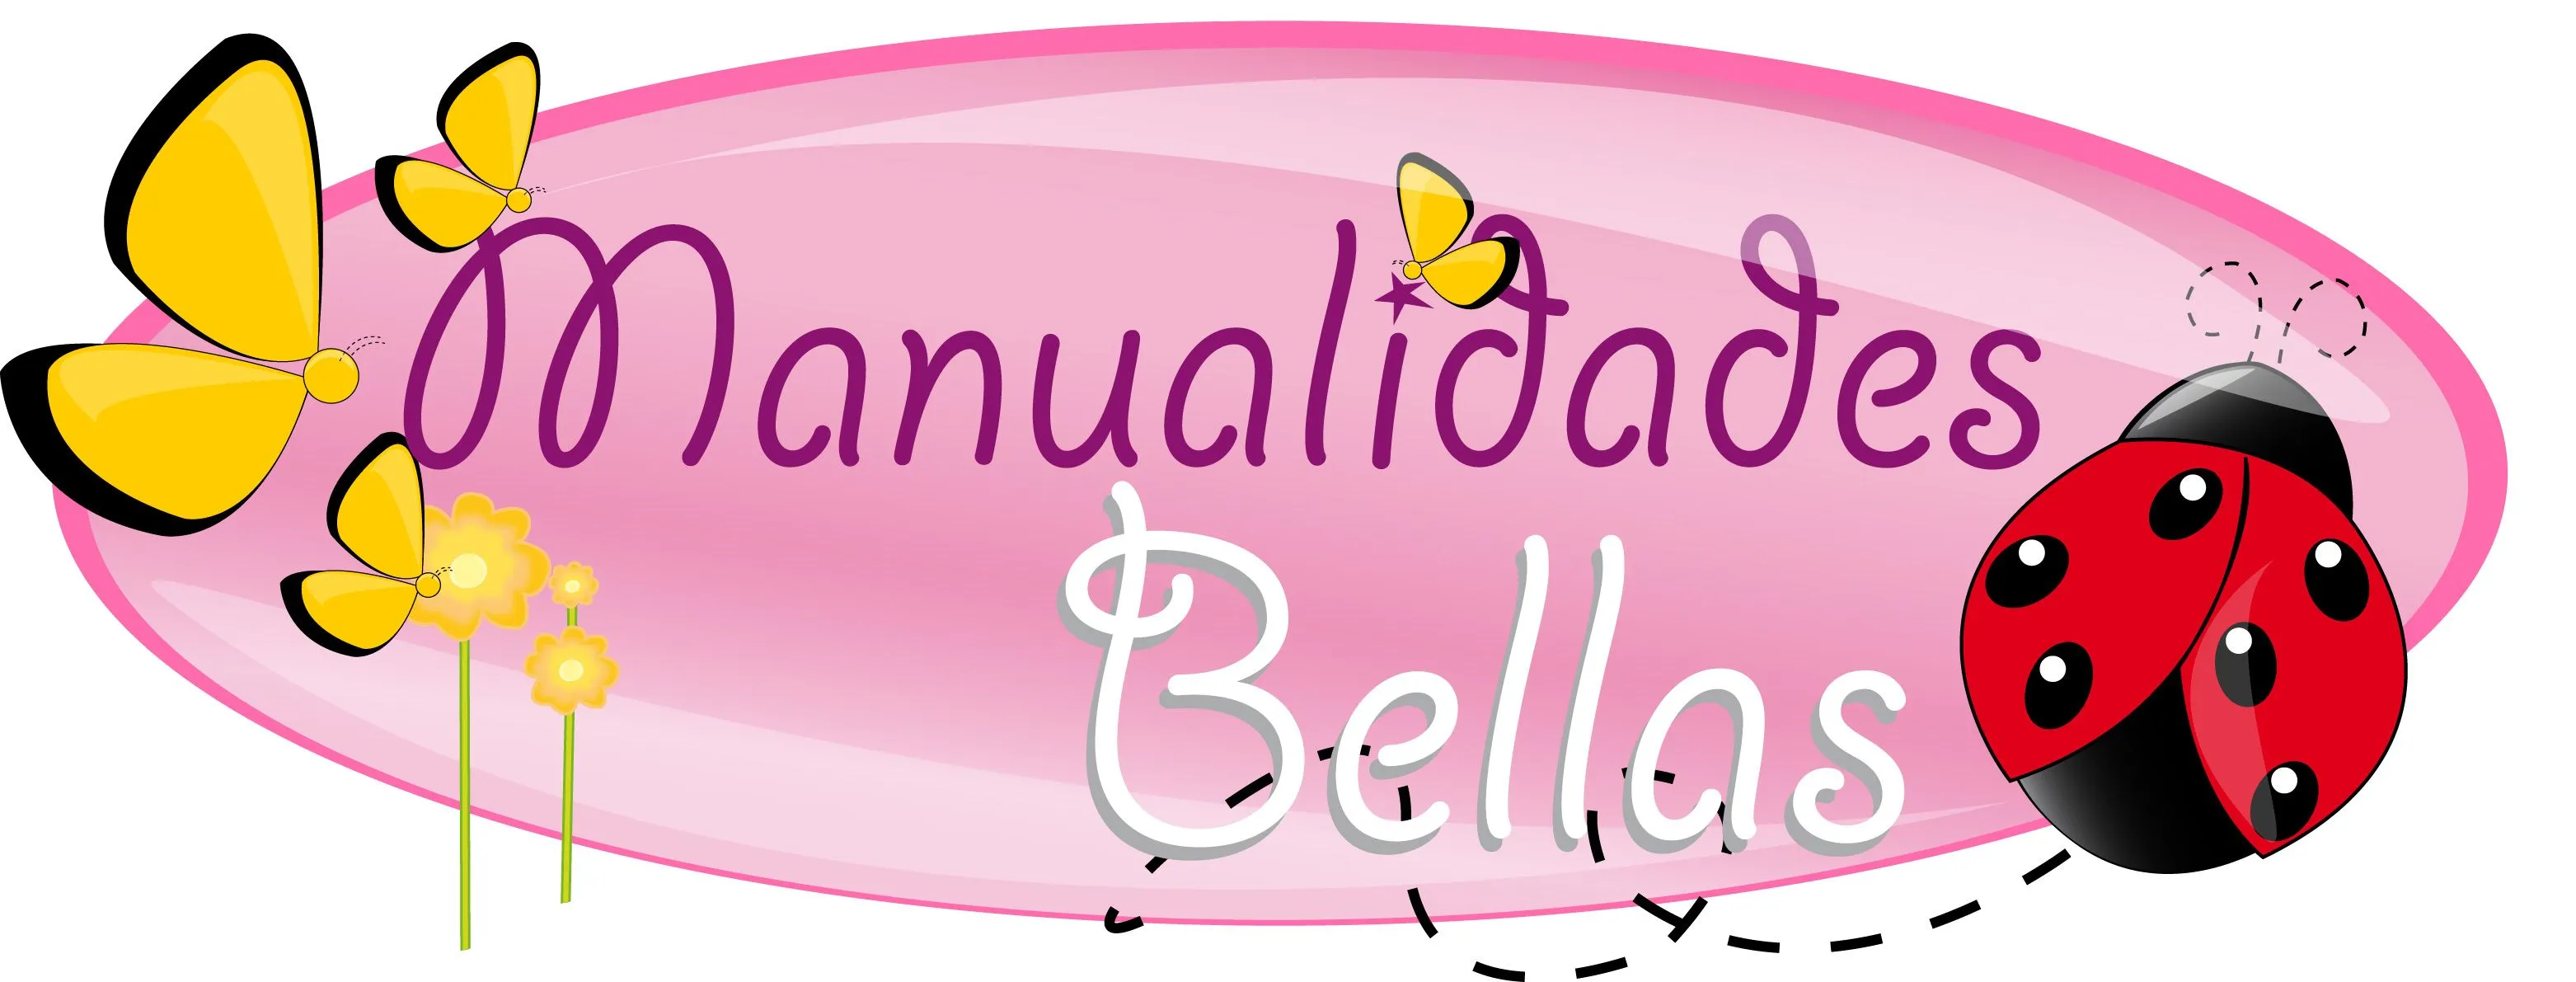 logo_manualidadesbellas2.jpg?w ...